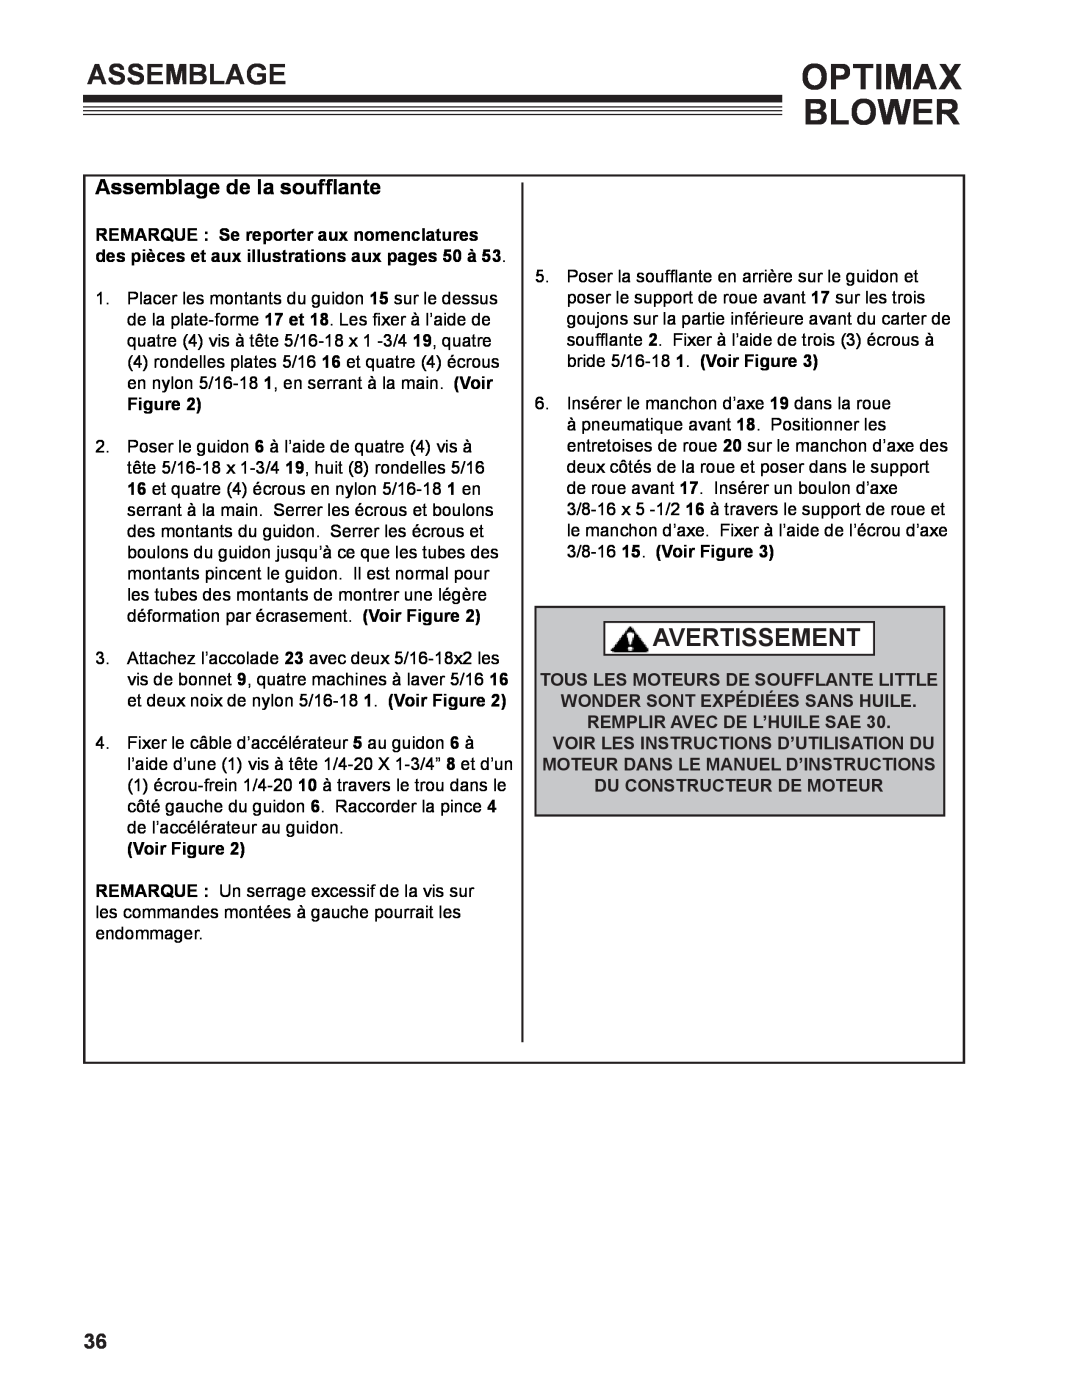 Little Wonder 9131-00-01 technical manual Assemblage de la soufflante, Optimax Blower, Avertissement, Voir Figure 